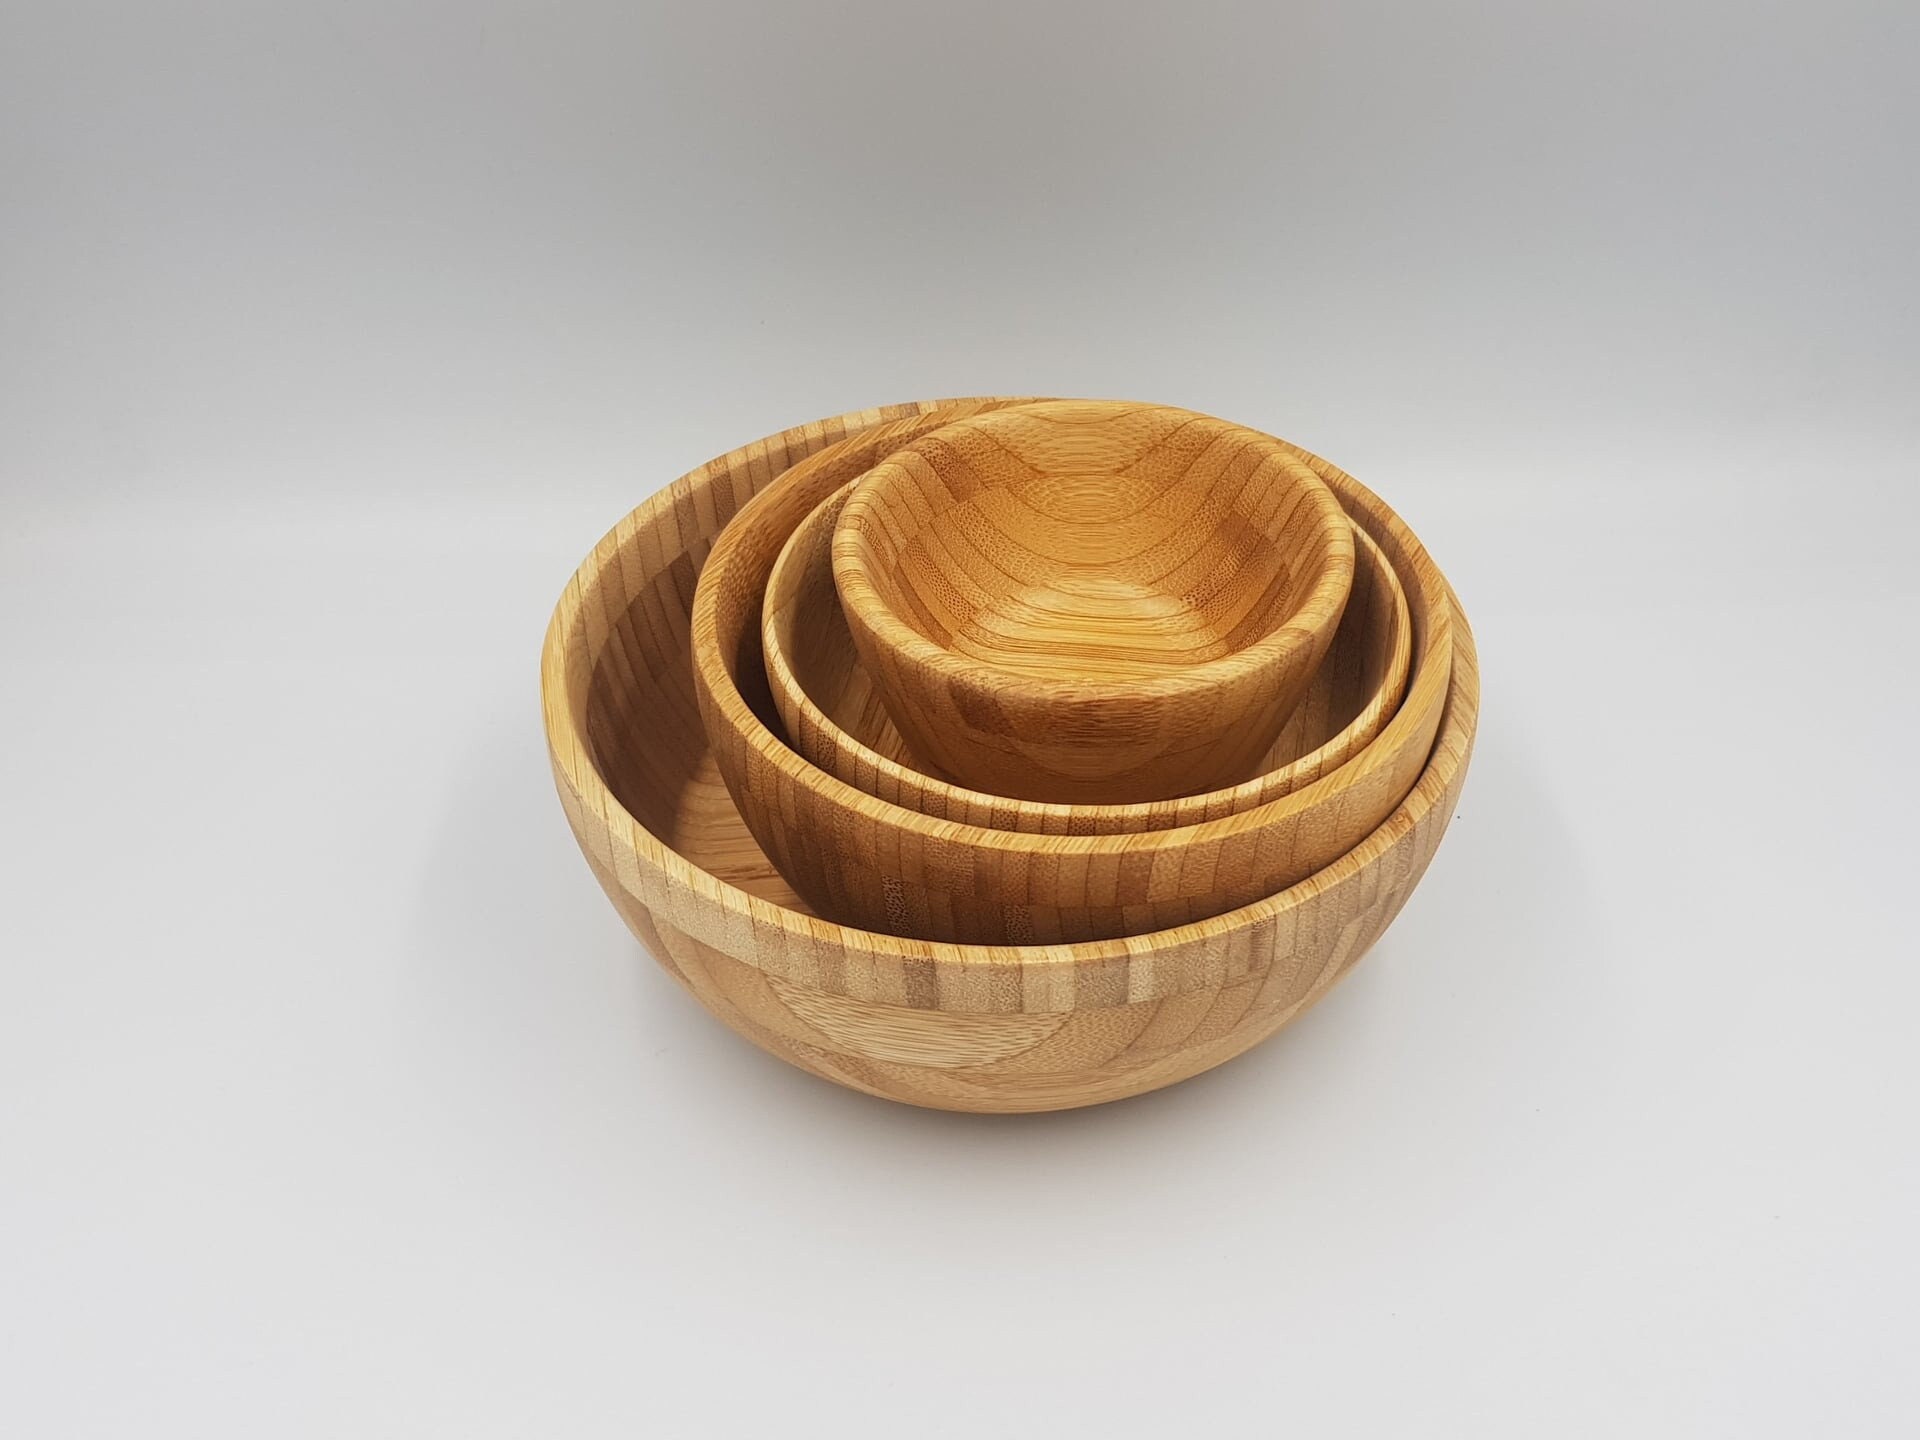 Aveco Biodegradable Reusable Bamboo Fiber Salad Bowl Kitchen Bowl Set with  Wood Lid - China Biodegradable Bowl and Eco-Friendly Salad Bowl price